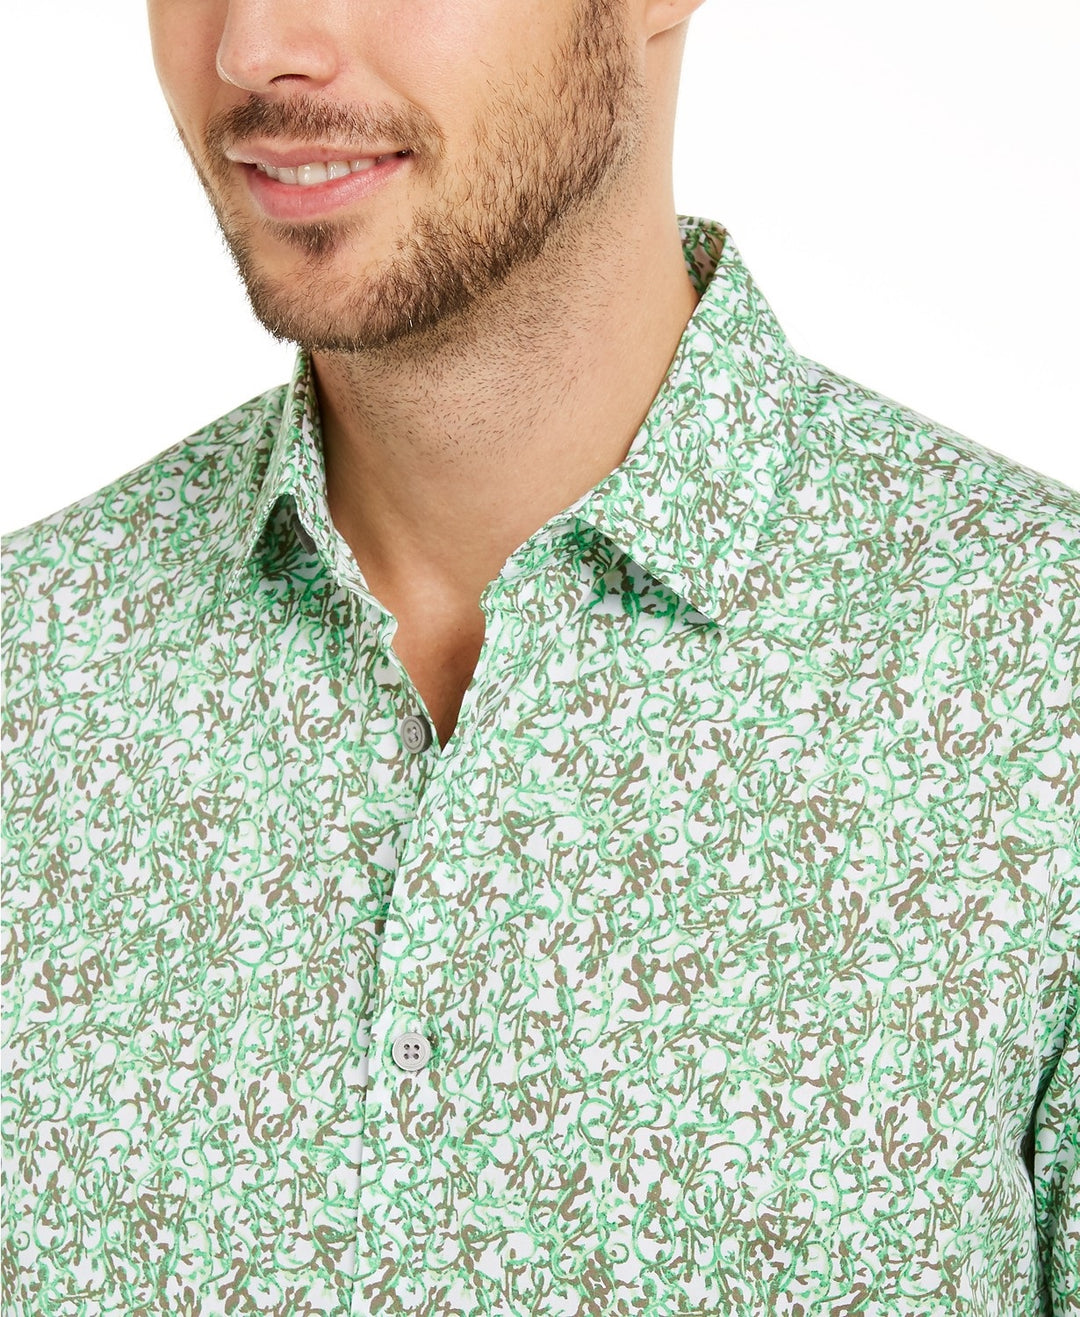 Alfani Men's Classic-Fit Lizard-Print Shirt Fresh Clover Size Large